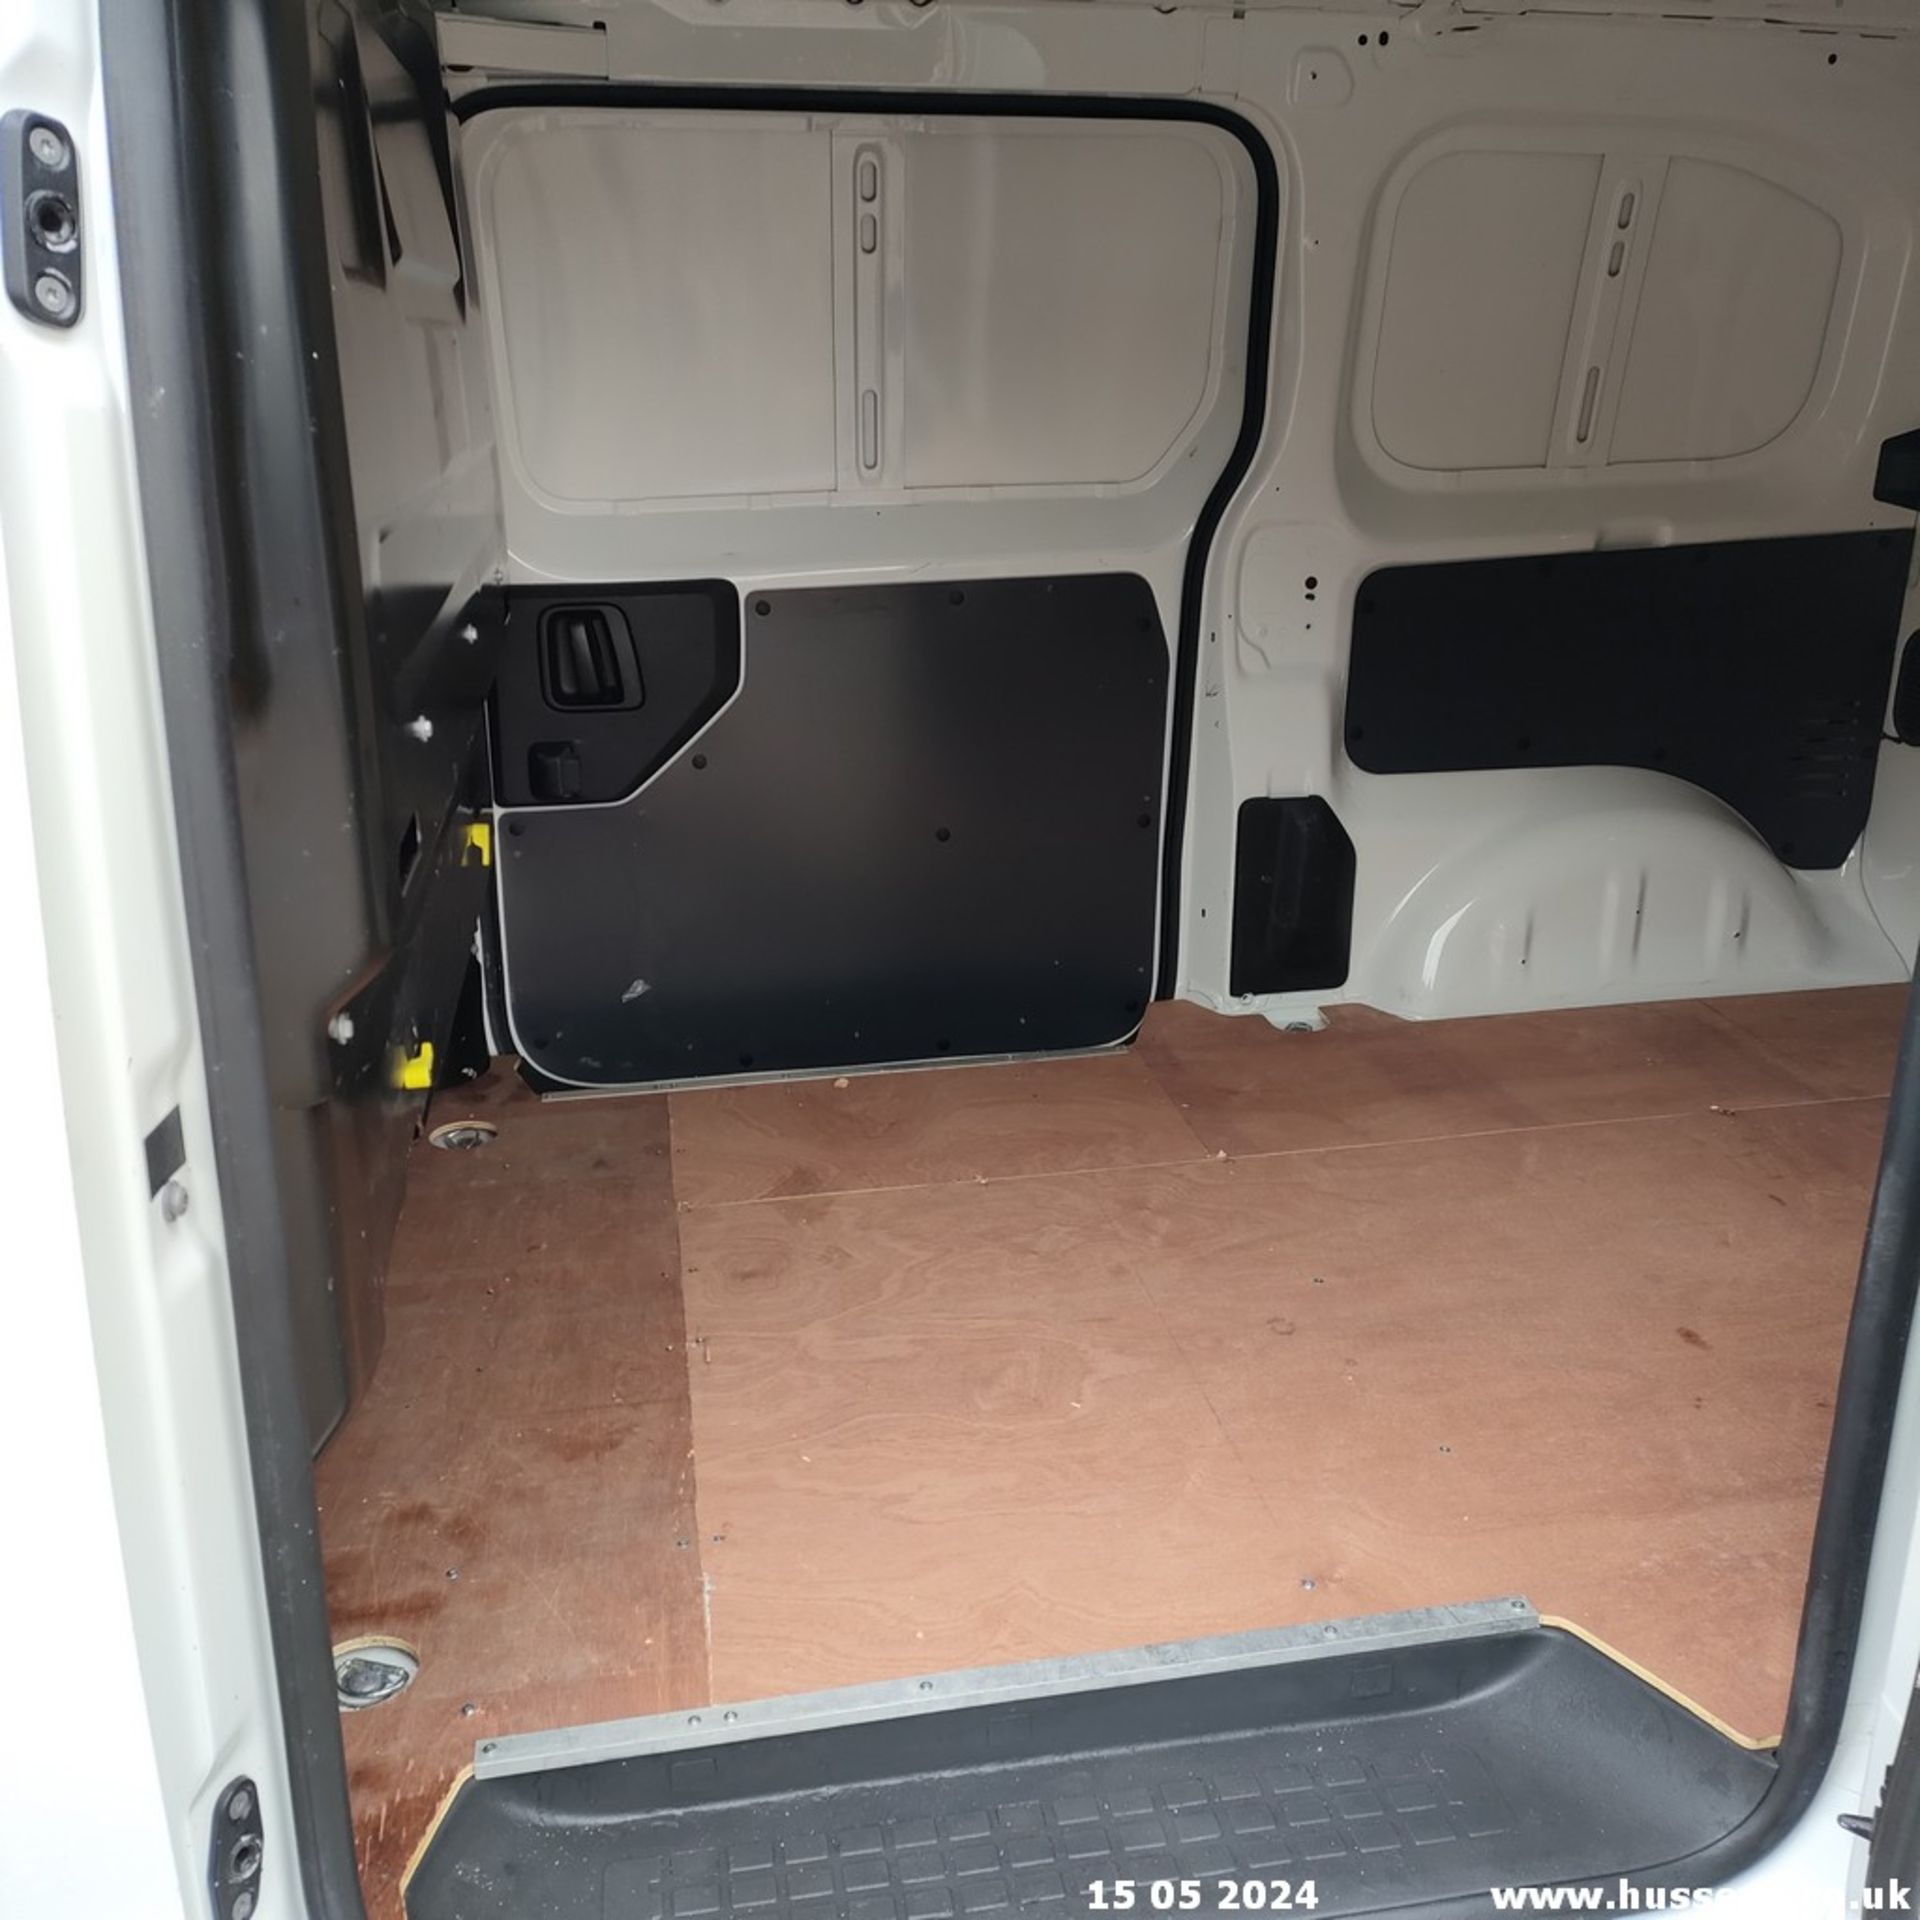 19/19 CITROEN DISPATCH 1000 EN-PRISE BH - 1500cc Van (White, 85k) - Image 62 of 66